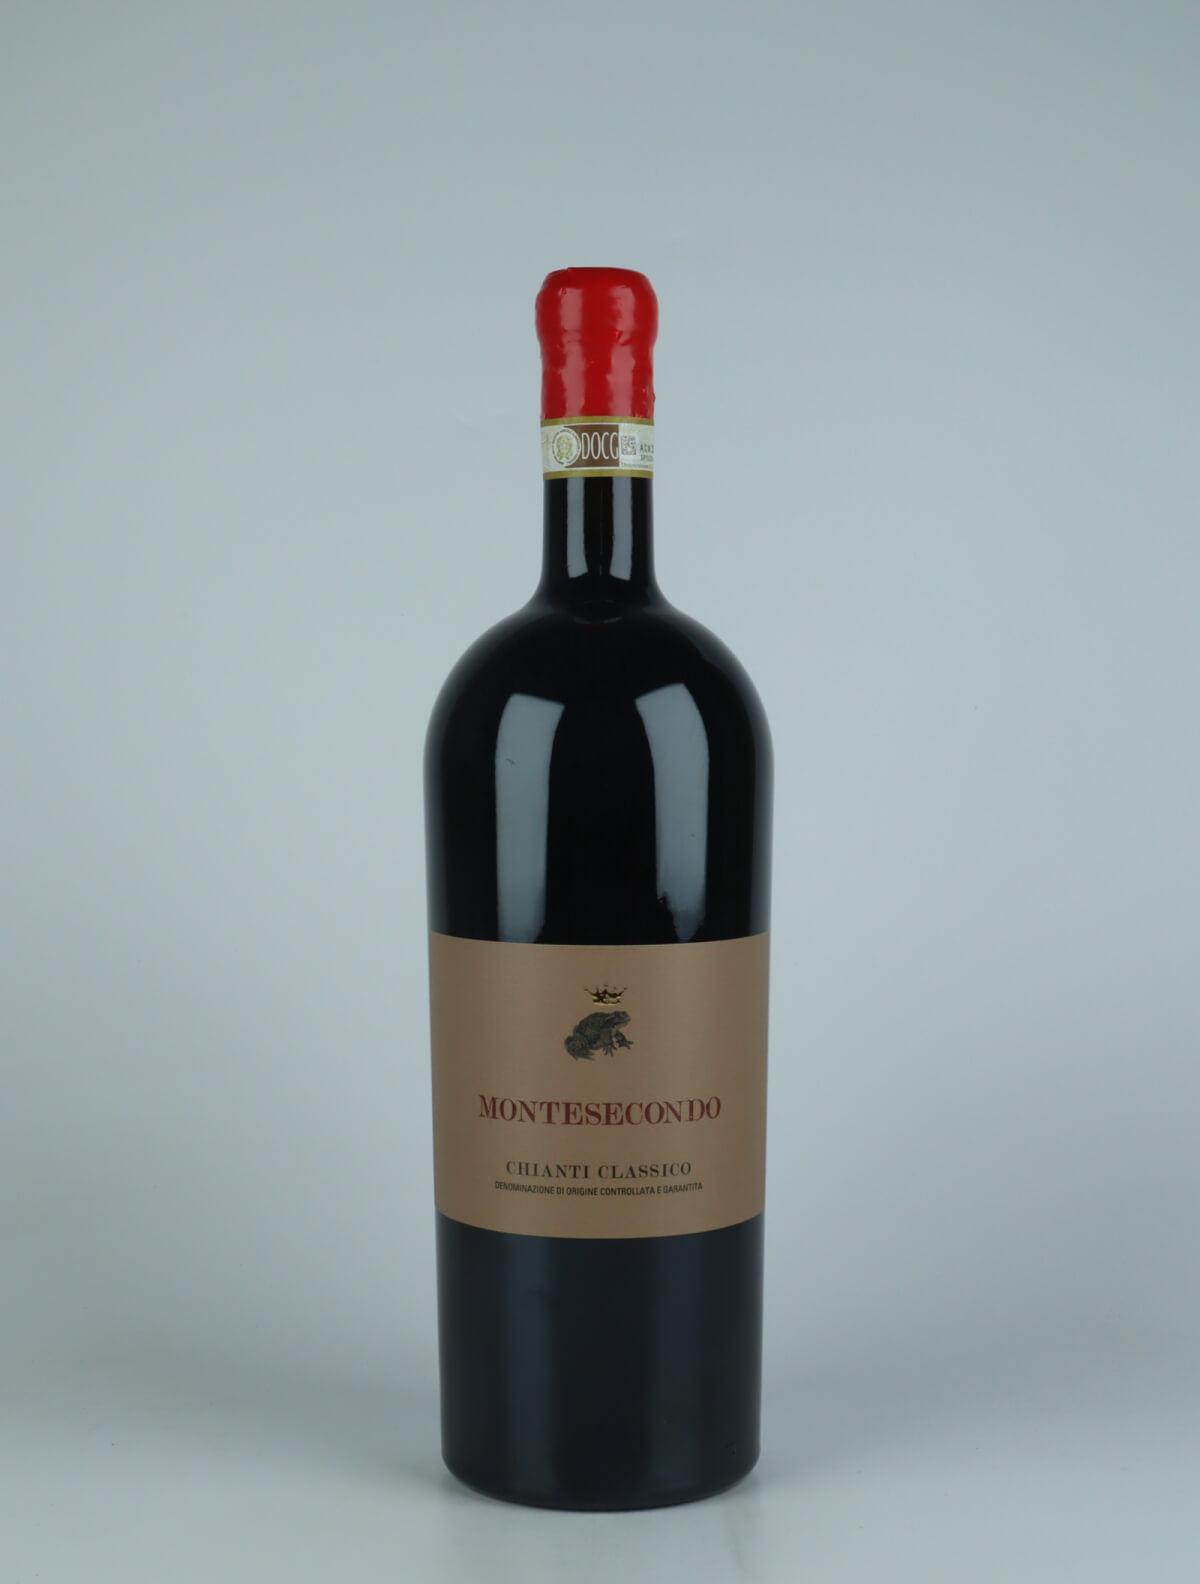 En flaske 2021 Chianti Classico Rødvin fra Montesecondo, Toscana i Italien